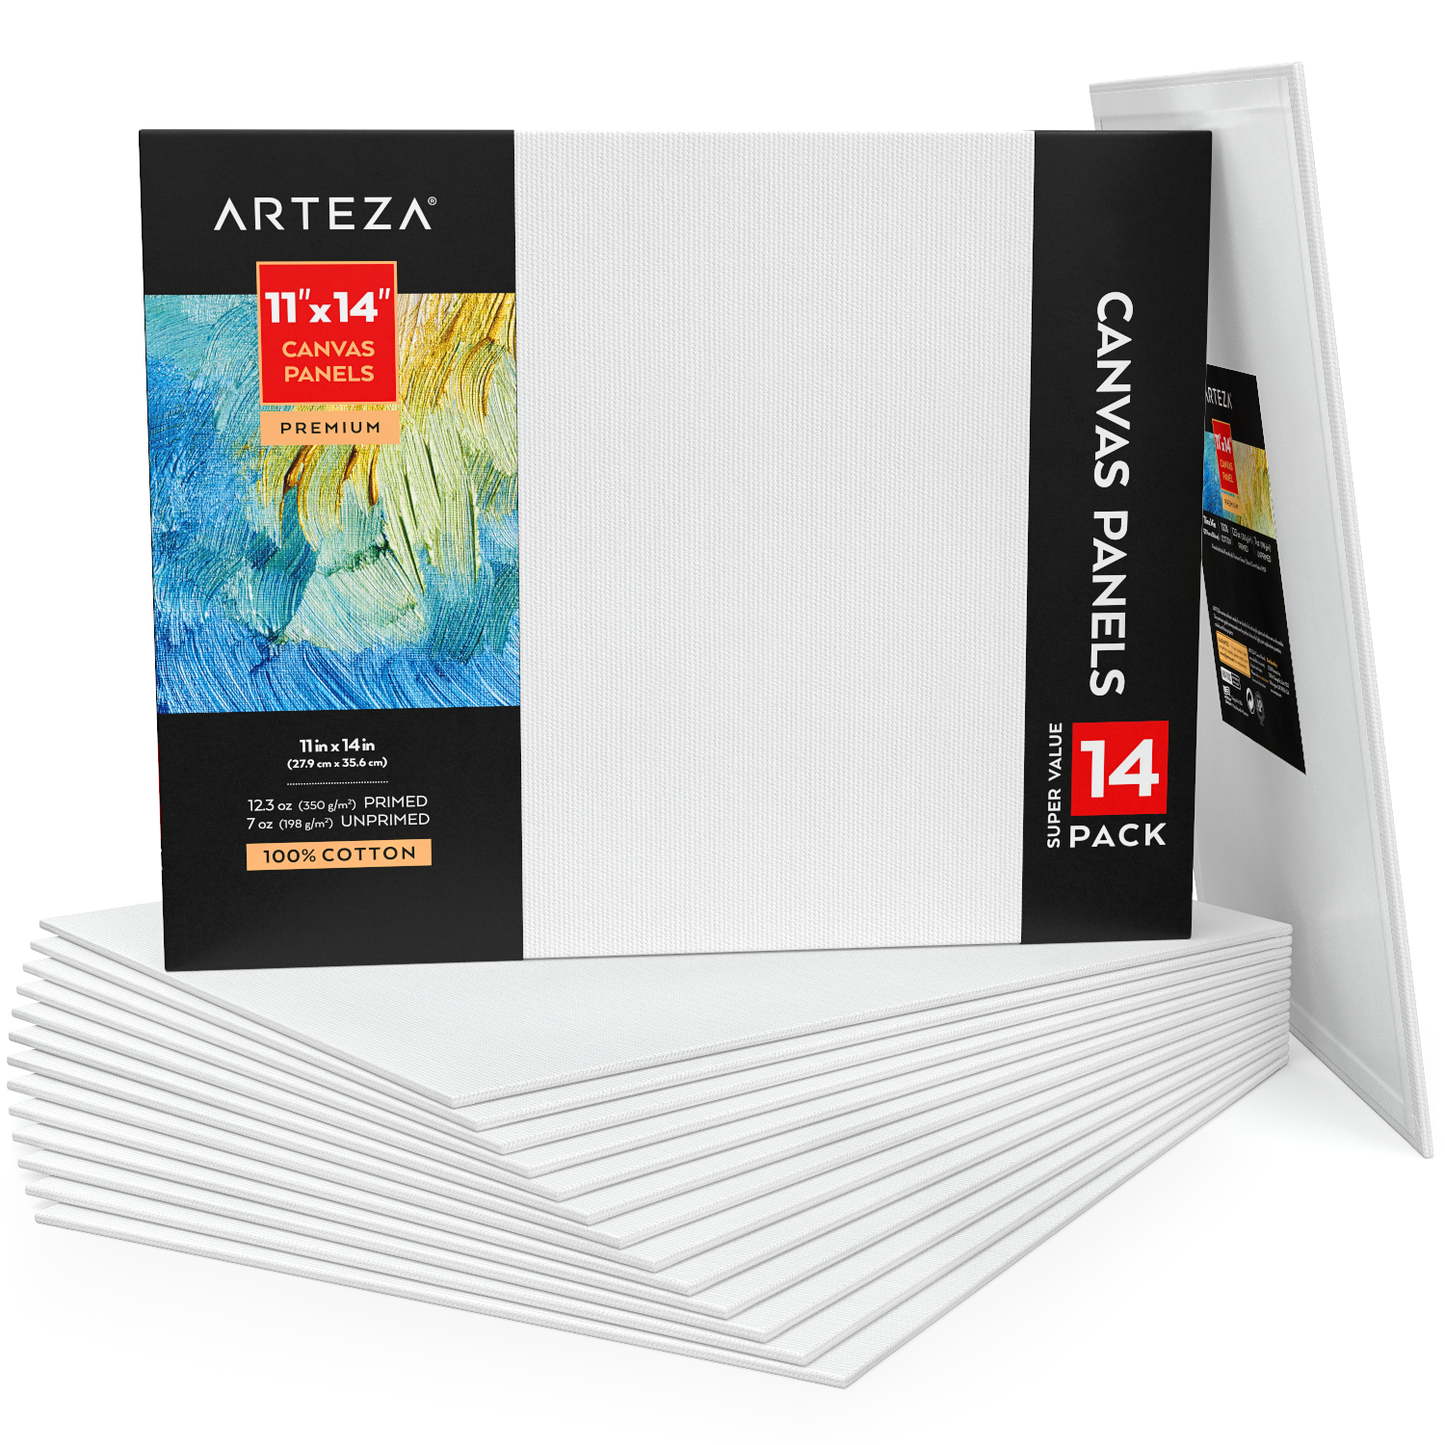 Premium Canvas Panels, 11" x 14" - Pack of 14